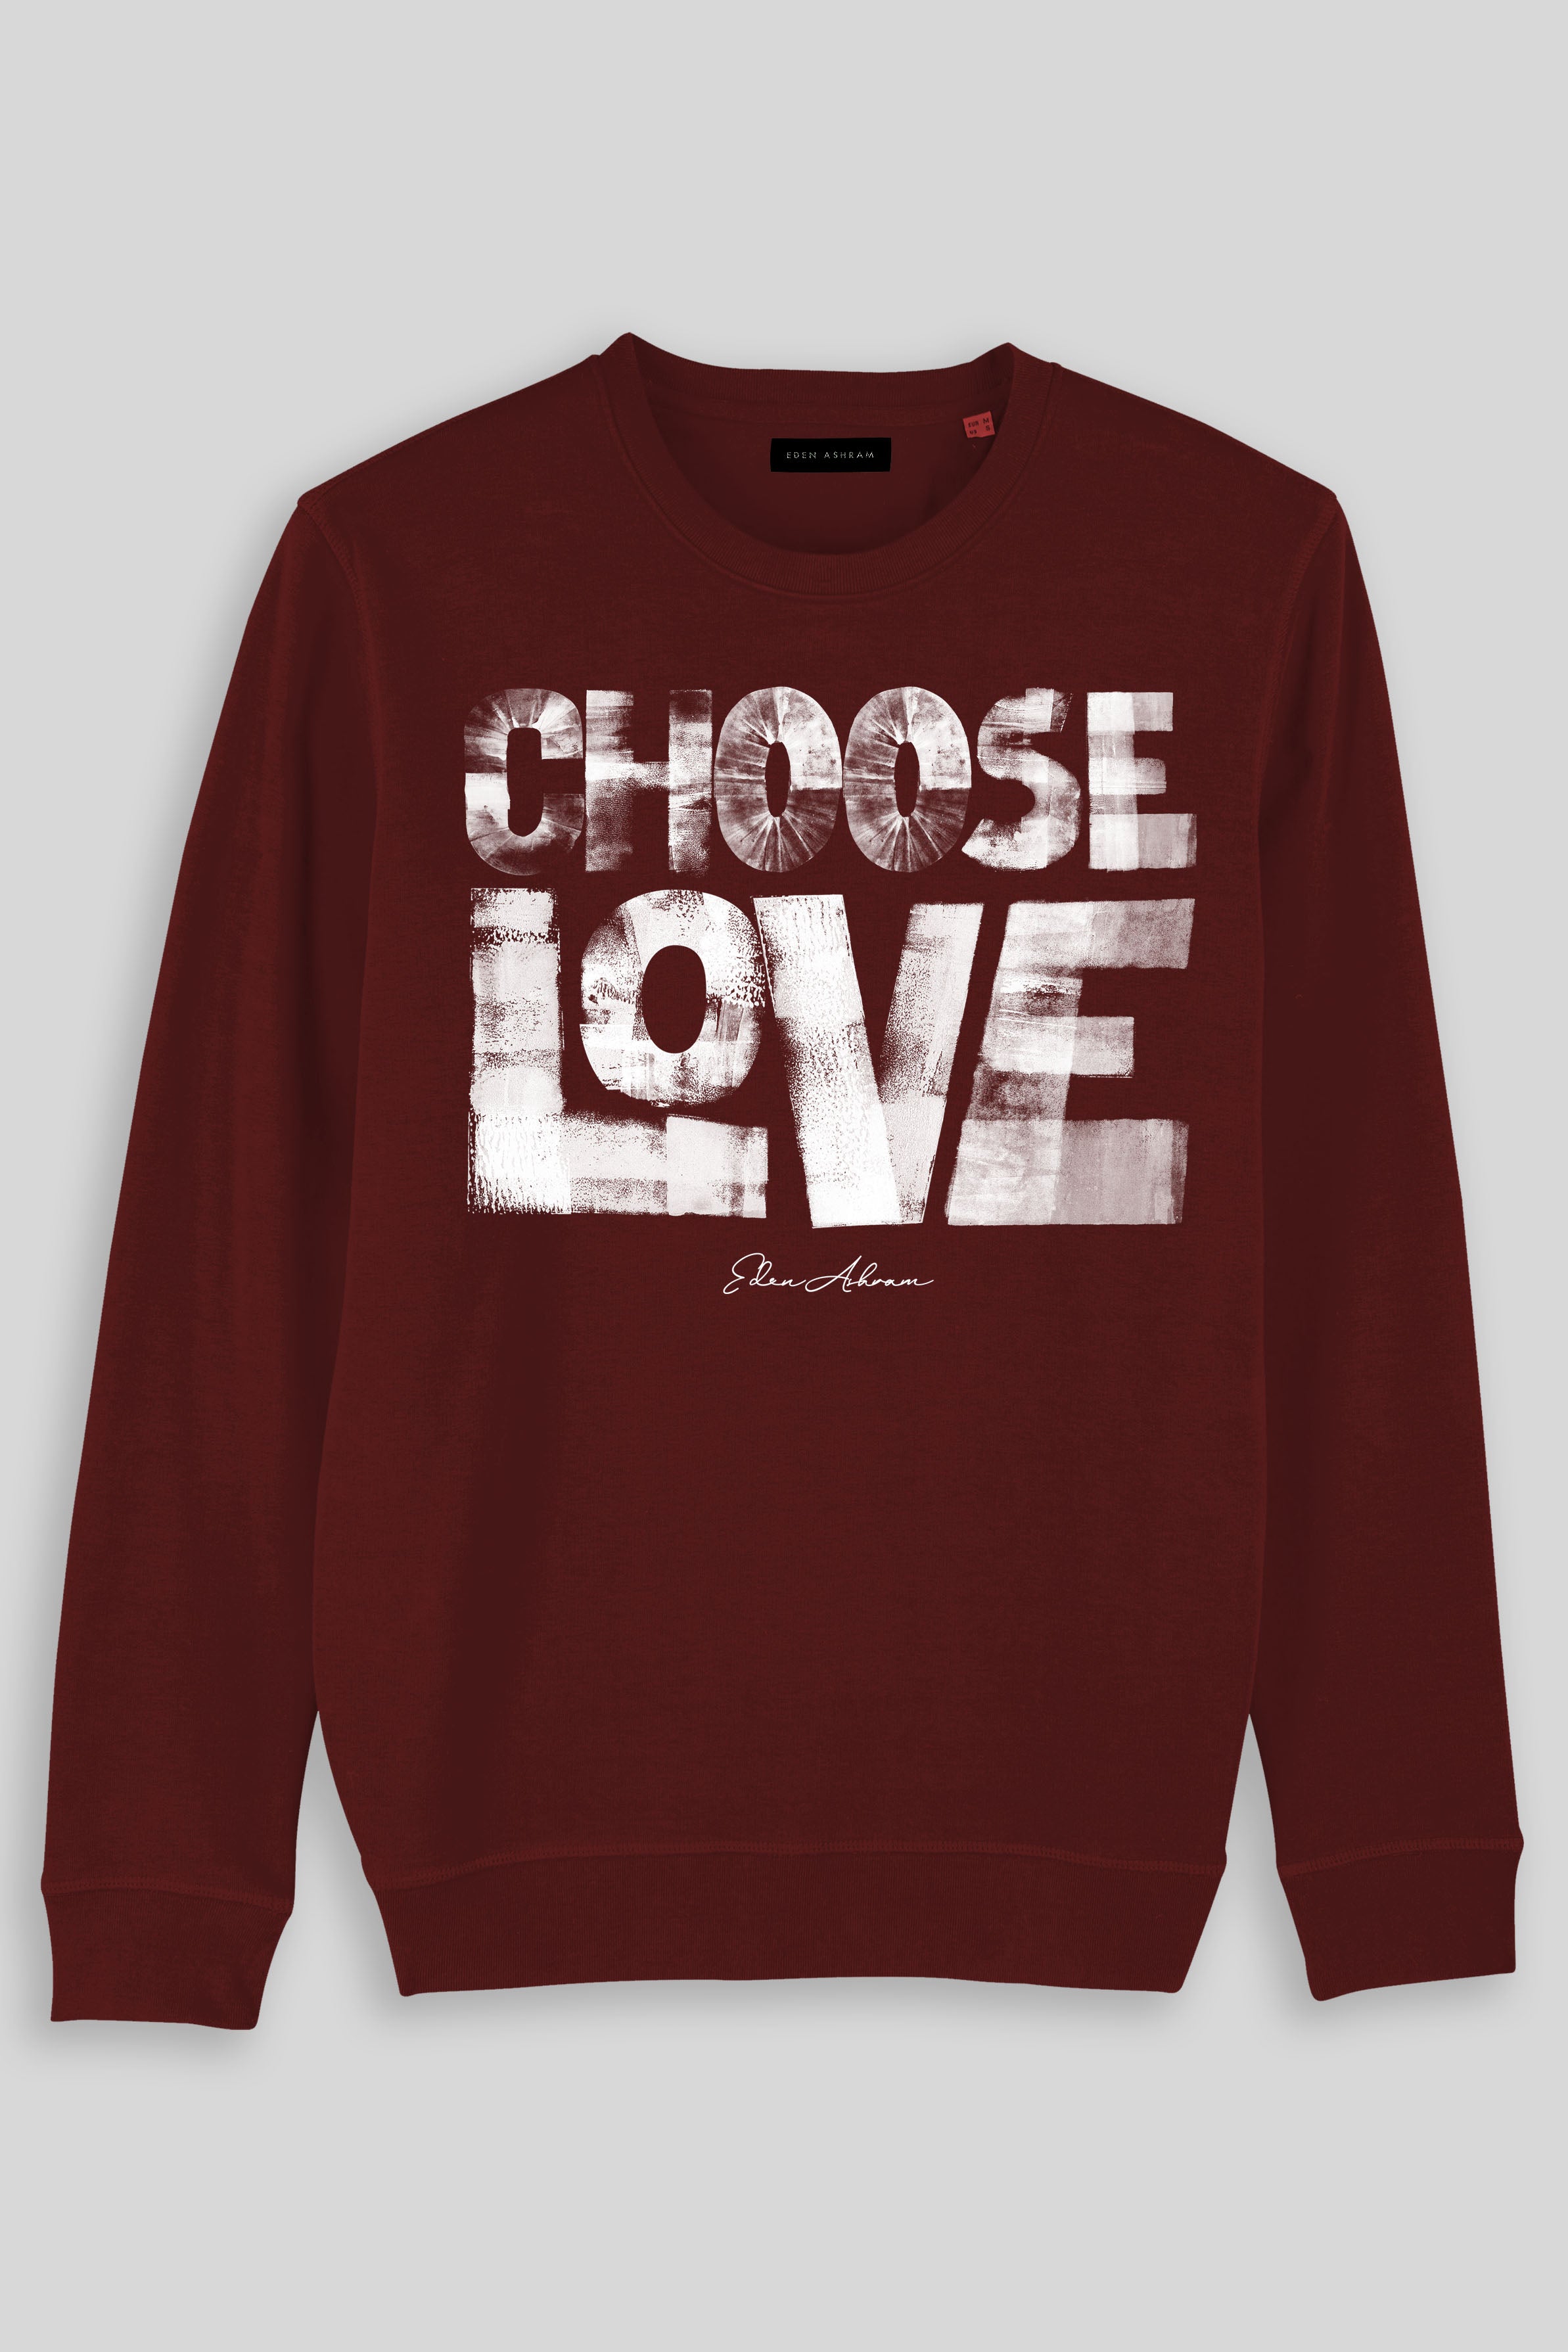 Eden Ashram Choose Love Premium Crew Neck Sweatshirt Burgundy